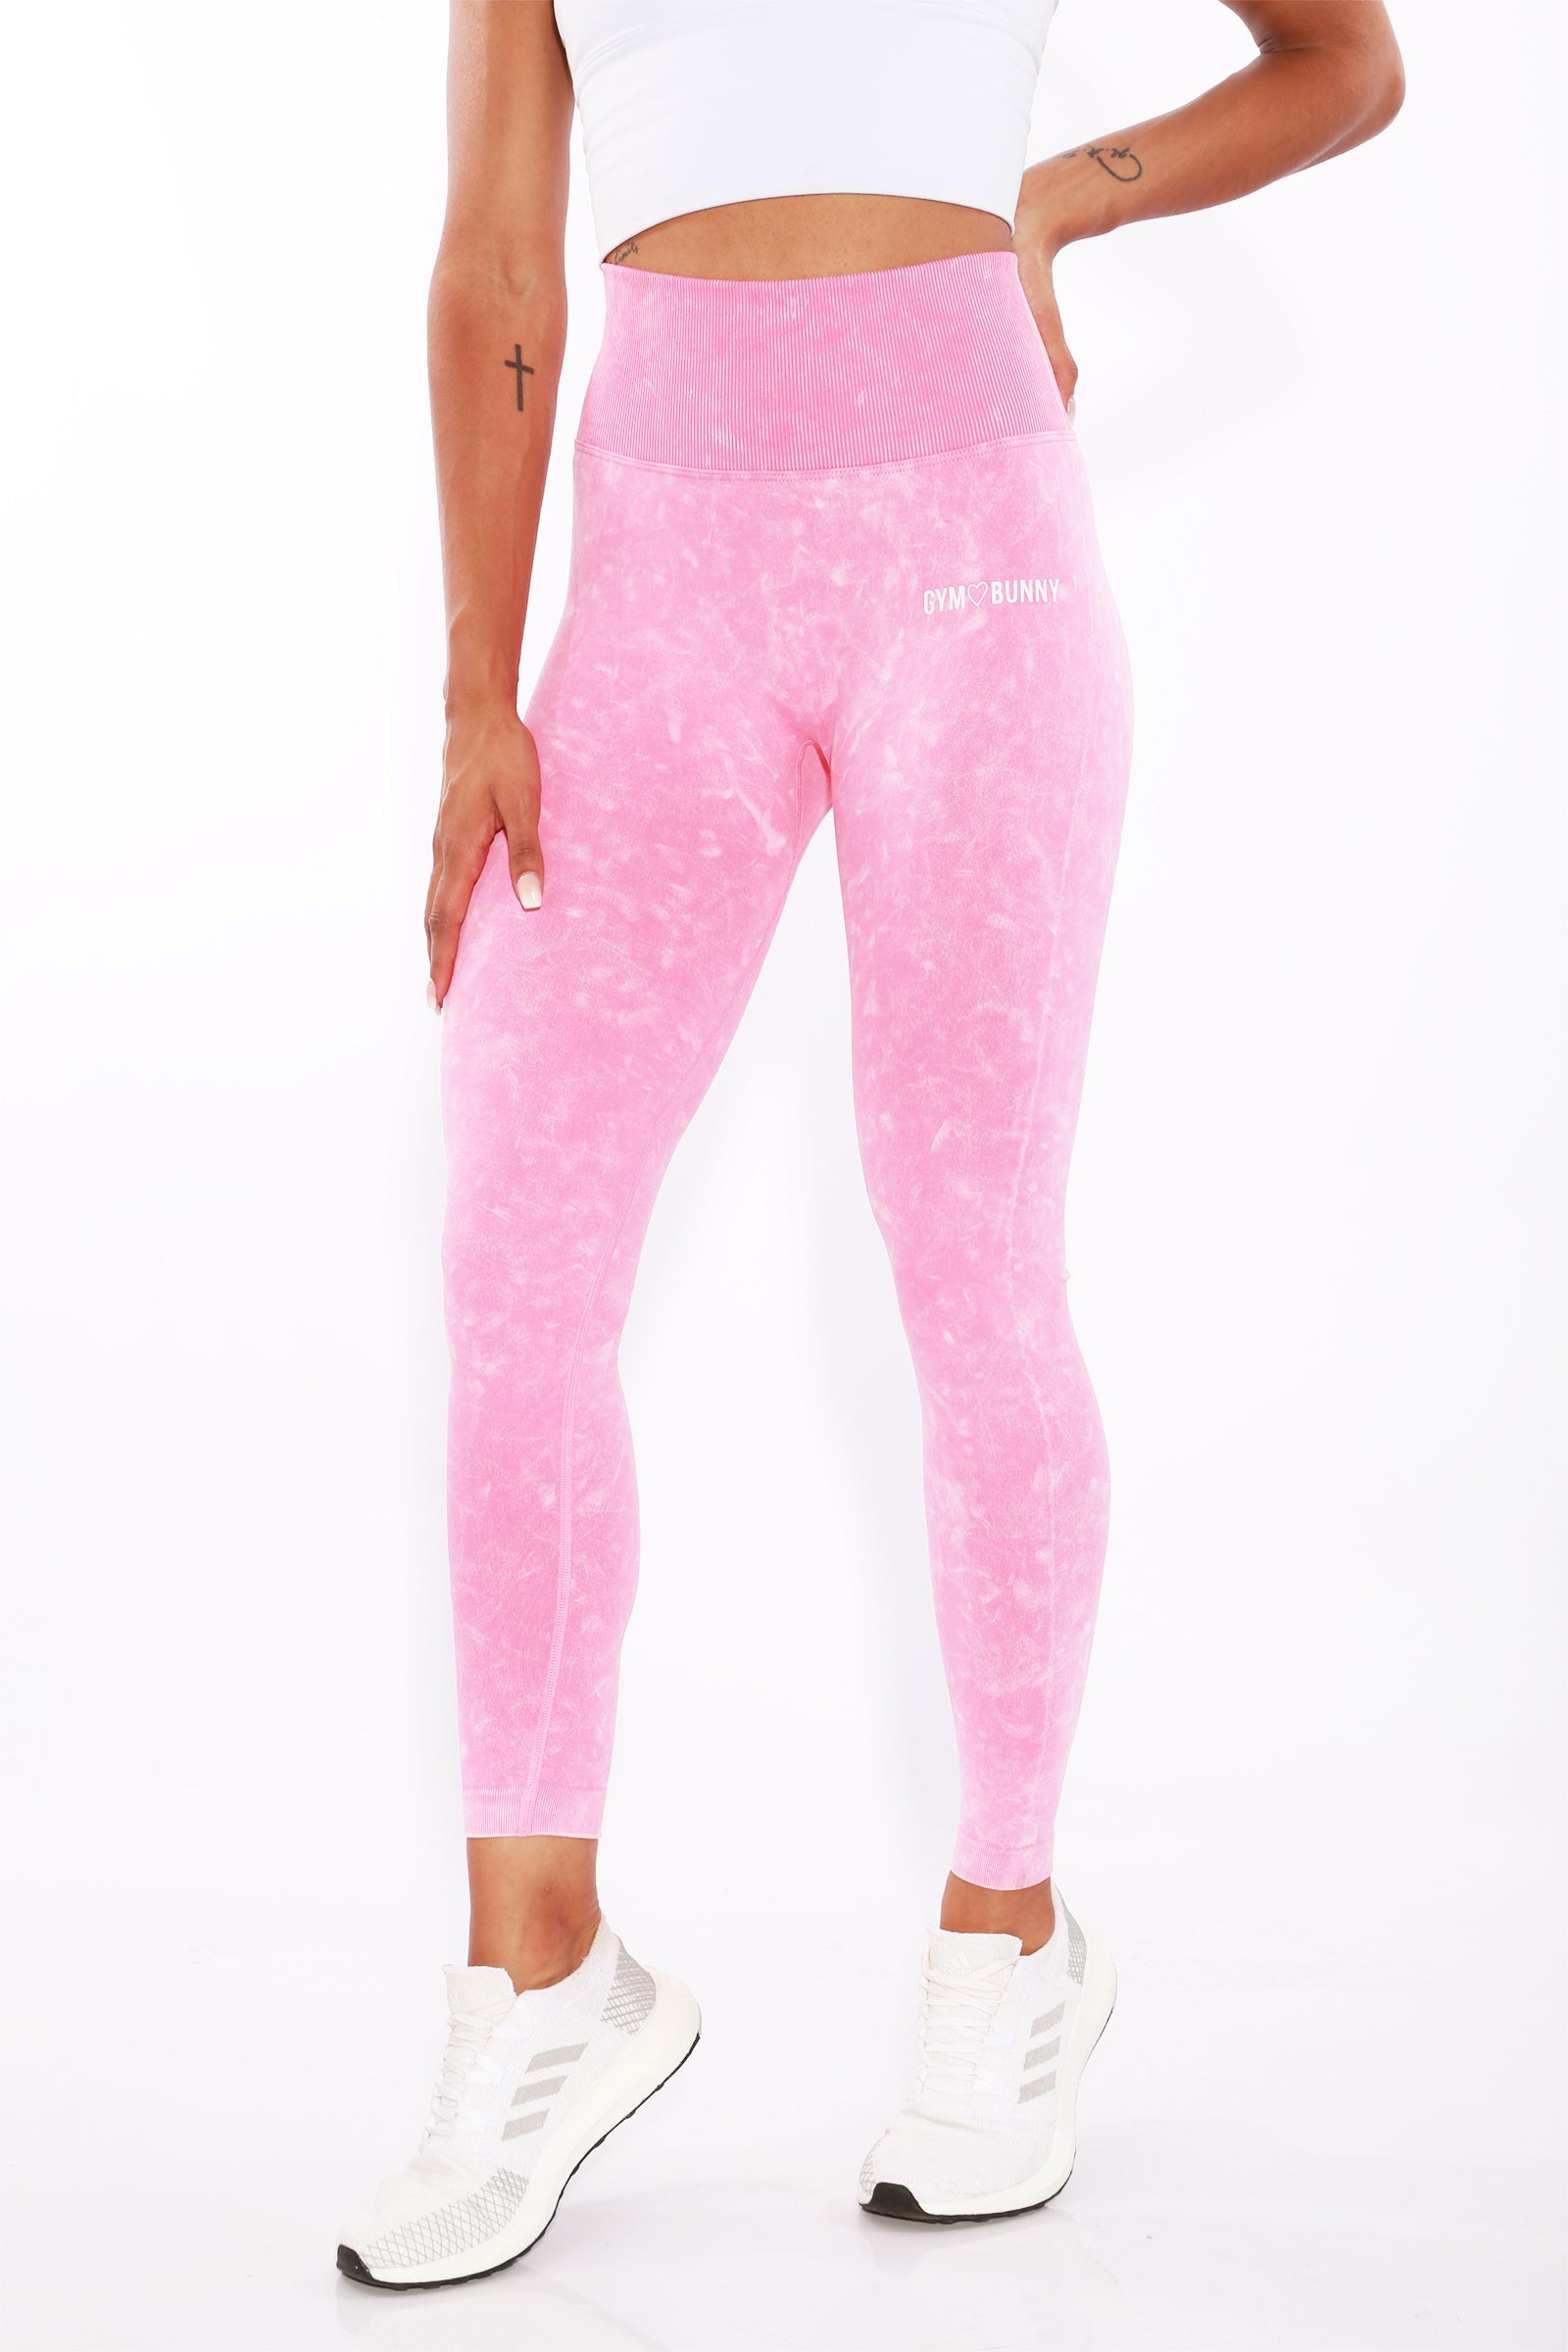 Image of Gym Bunny Summer Scrunch leggings -Pink wash